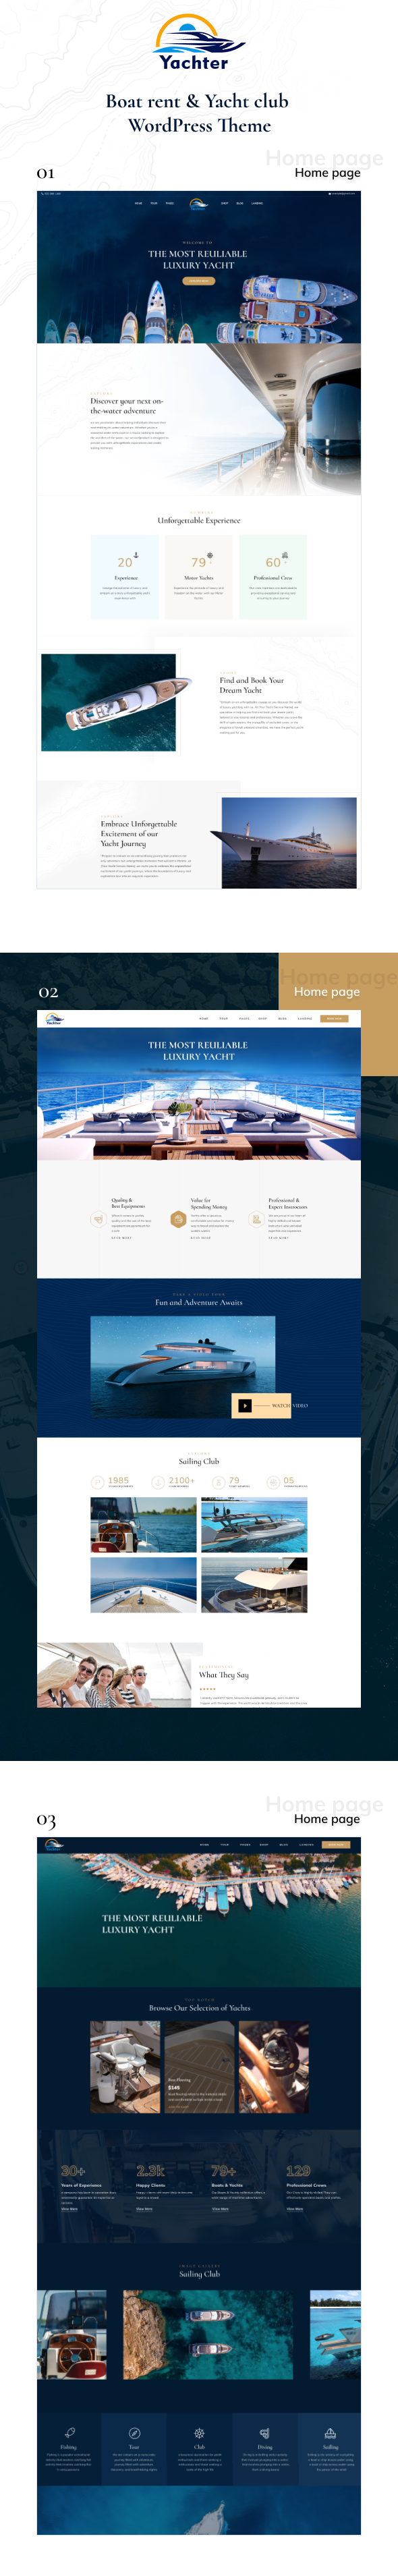 Yachter - Yacht and Boat Rental Service WordPress Theme - 2